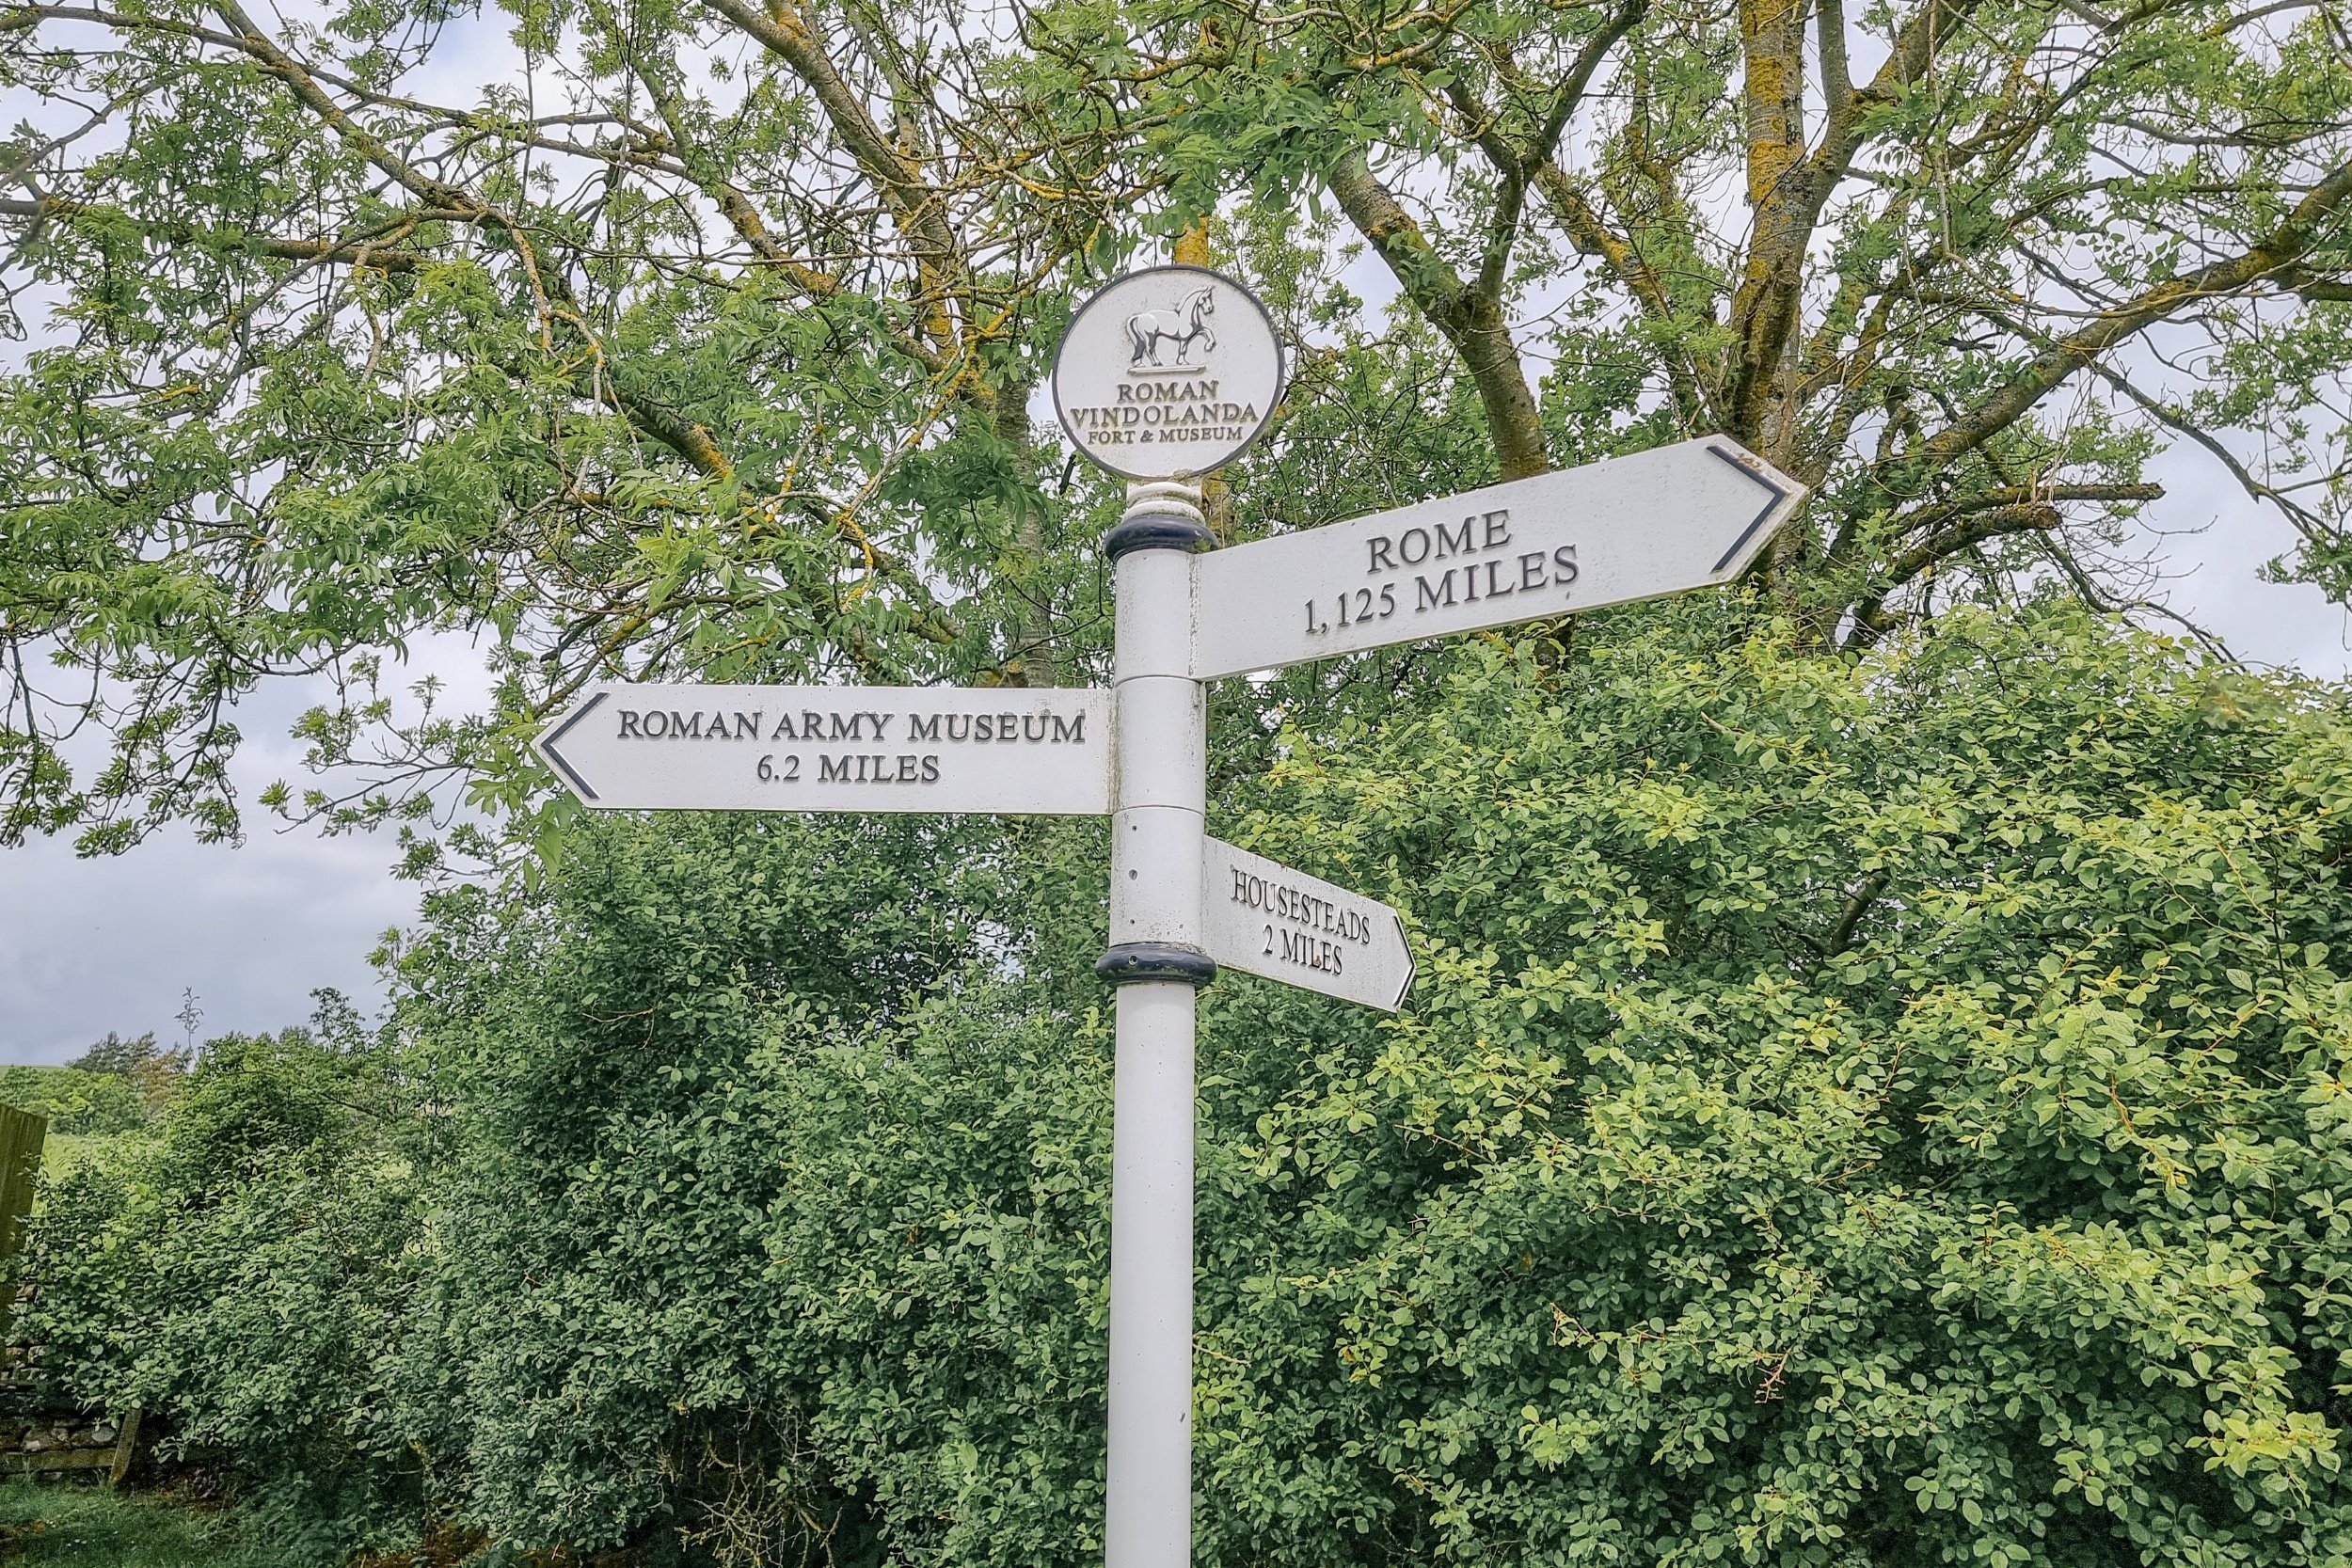 The sign post at Vindolanda 